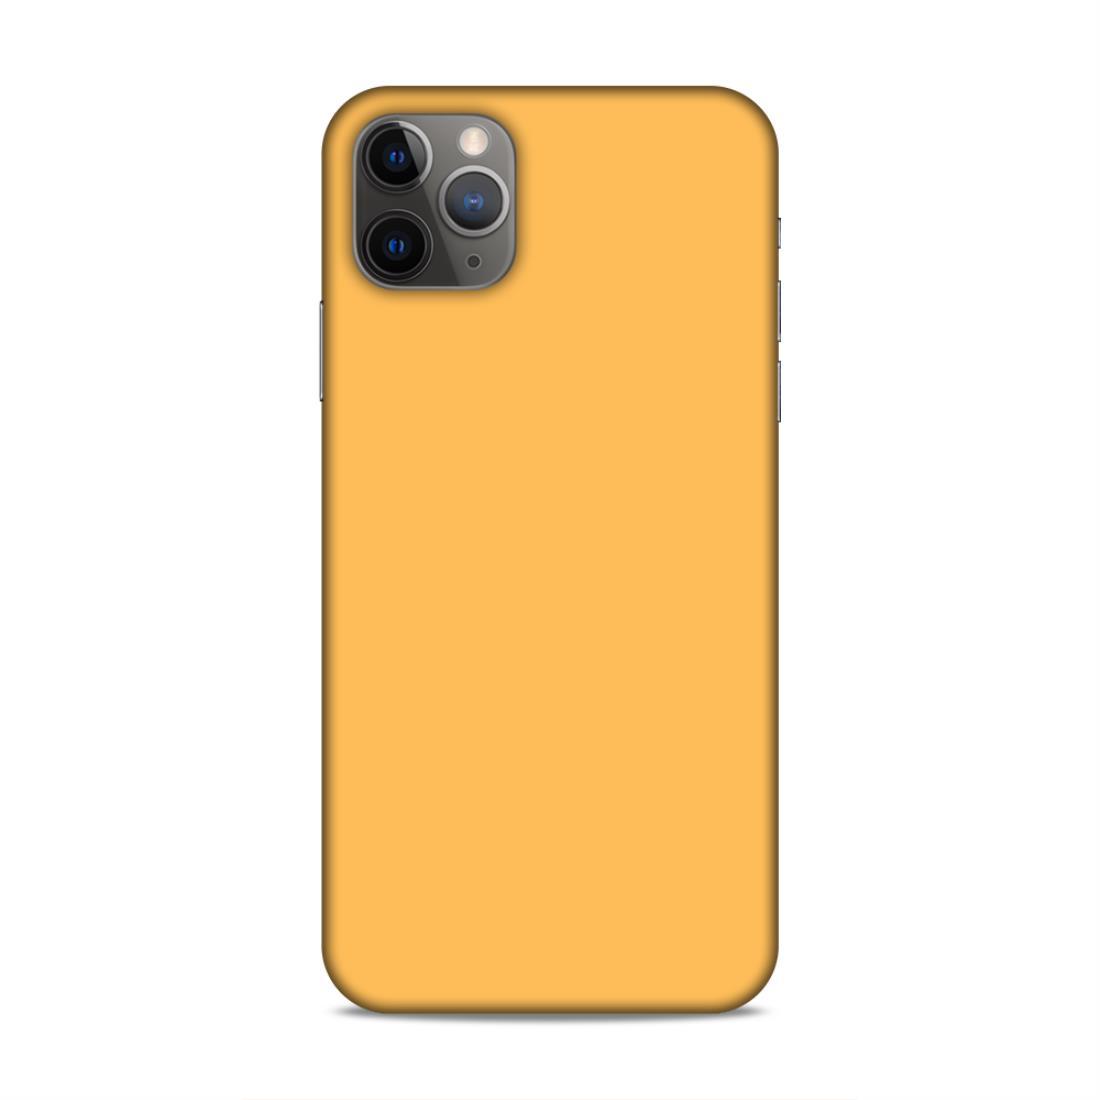 Peach Classic Plain iPhone 11 Pro Max Phone Cover Case